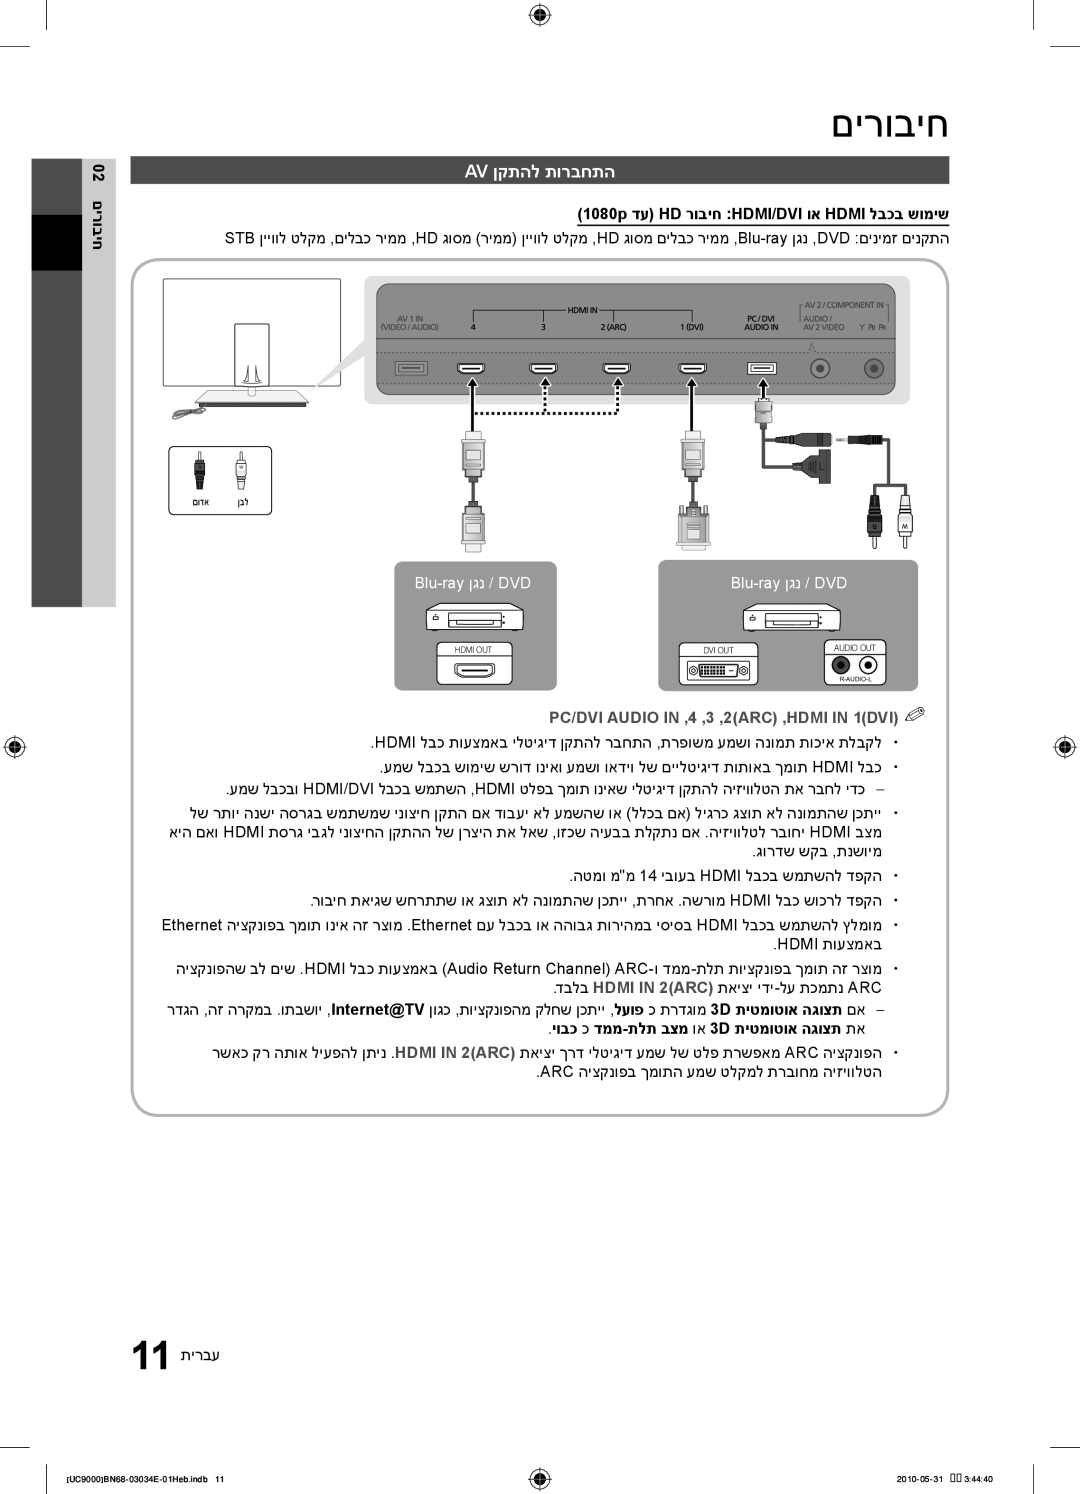 Samsung UA55C9000SRXSQ manual Av ןקתהל תורבחתה, 02 םירוביח, 1080p דע HD רוביח HDMI/DVI וא Hdmi לבכב שומיש 